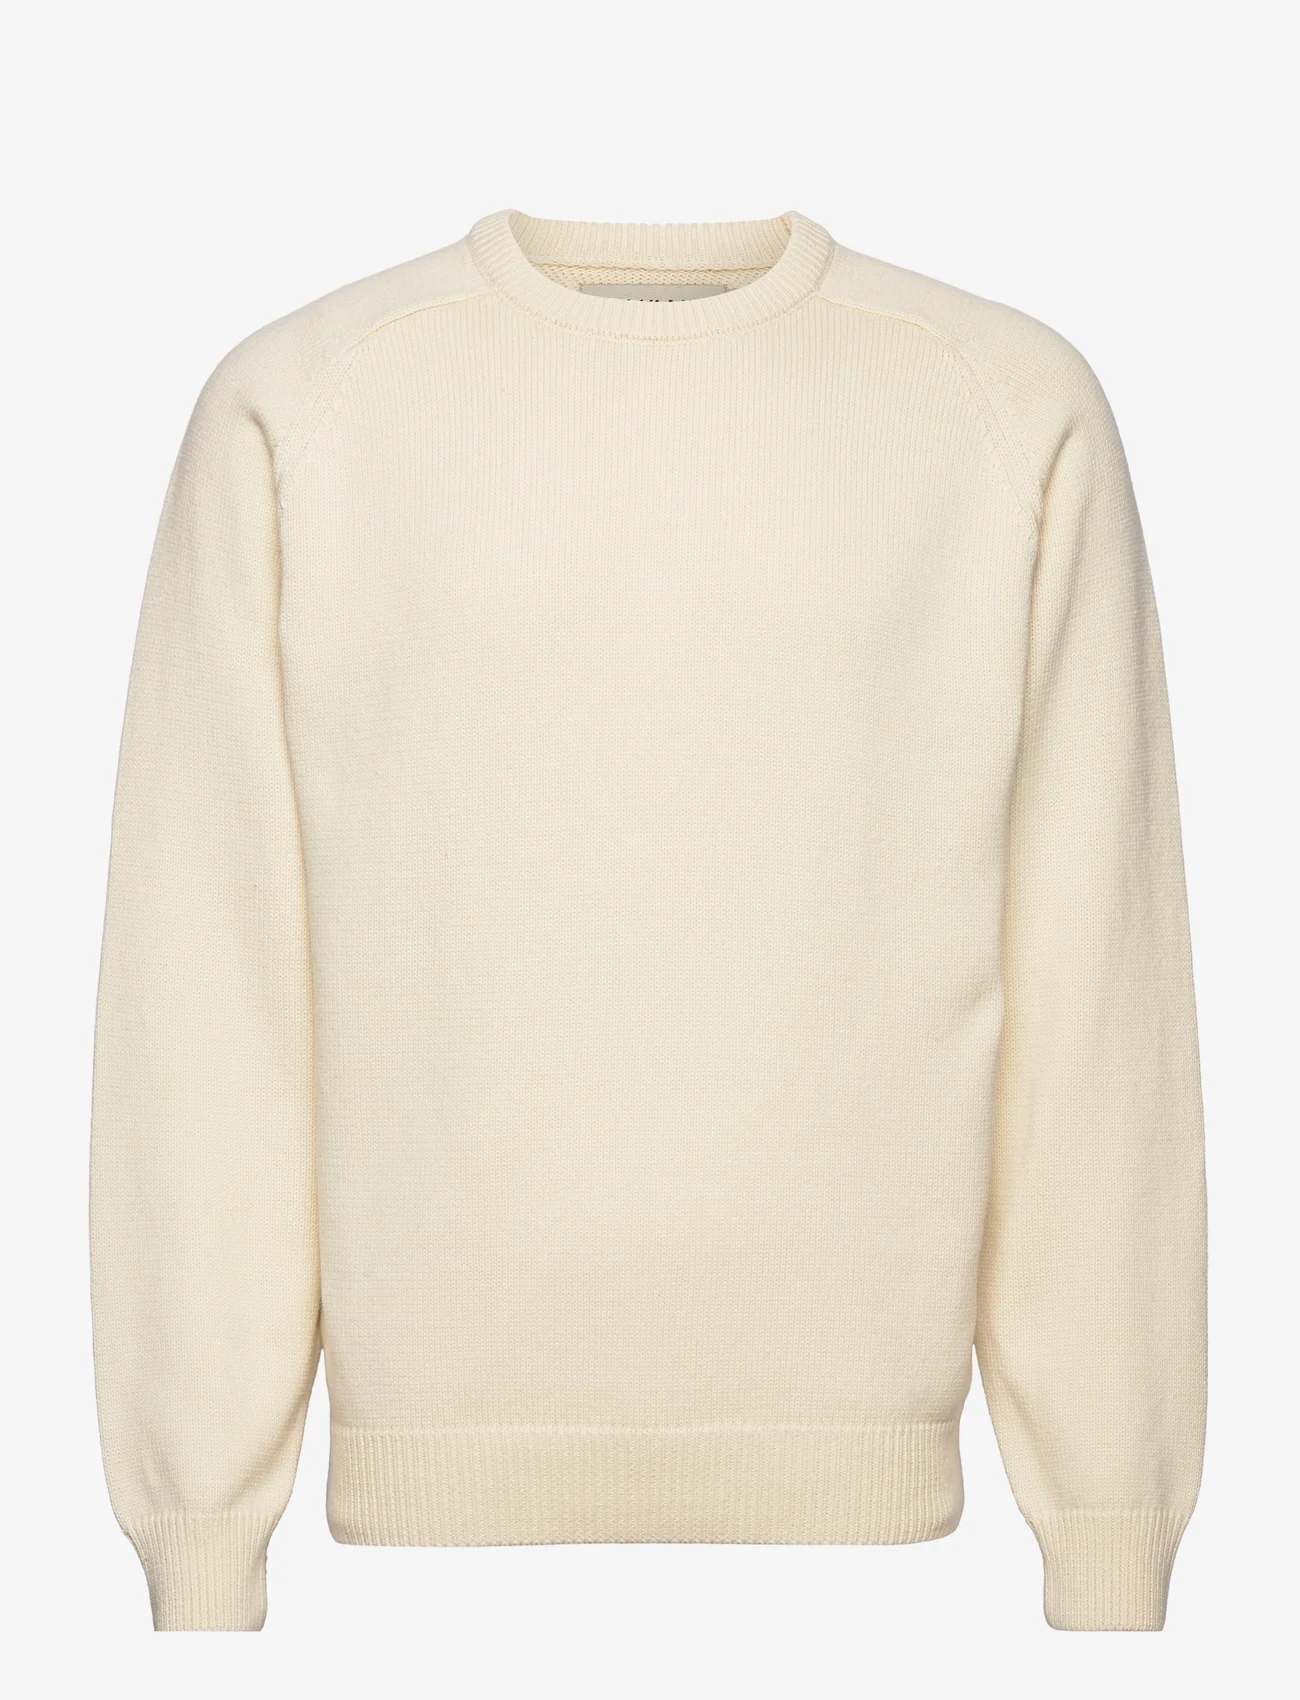 Taikan - Knit Sweater-Cream - basic-strickmode - cream - 0